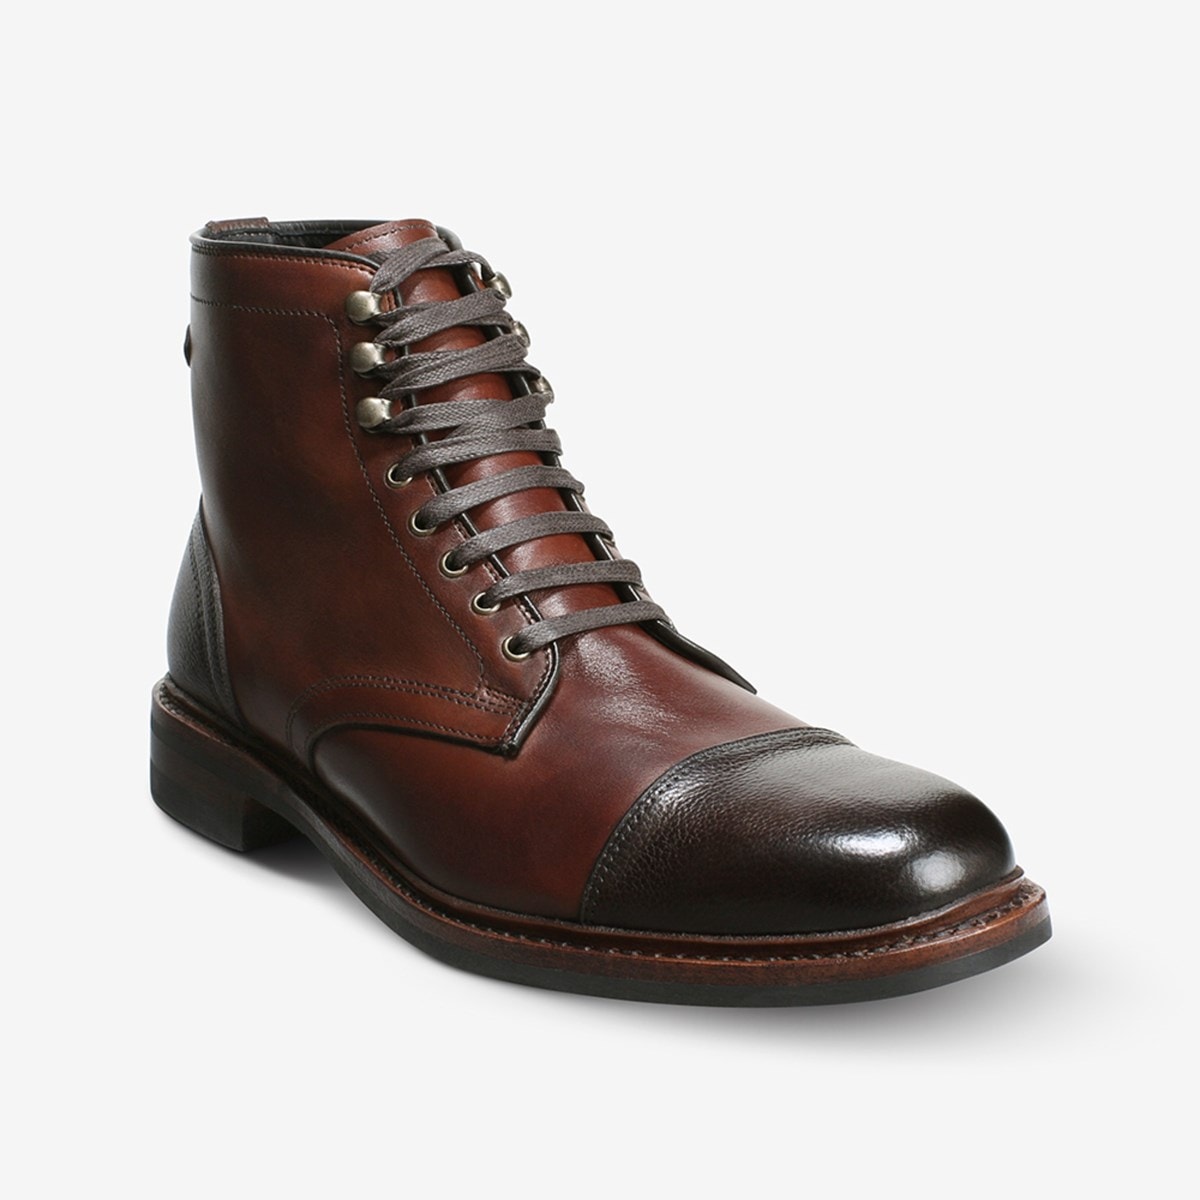 Landon Cap-toe Boot | Men's Boots | Allen Edmonds